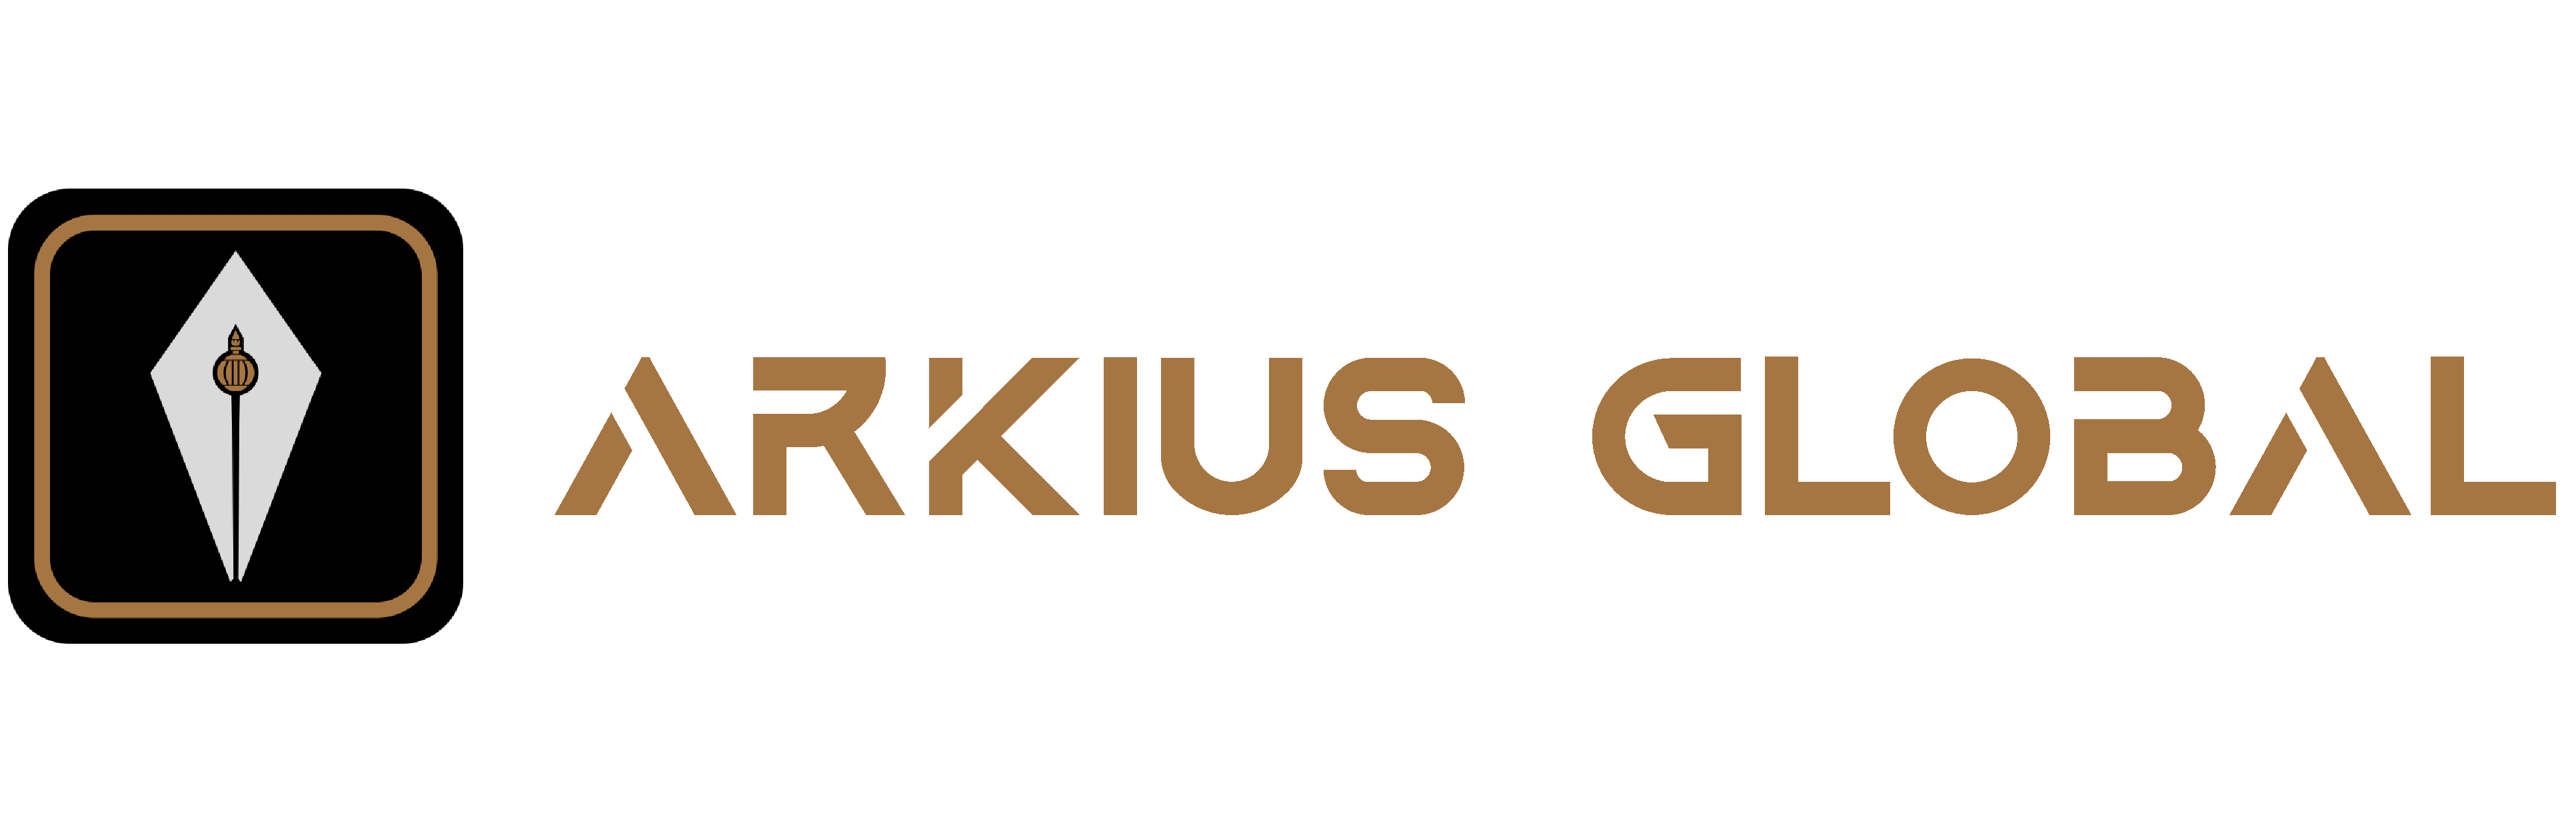 Arkius Global